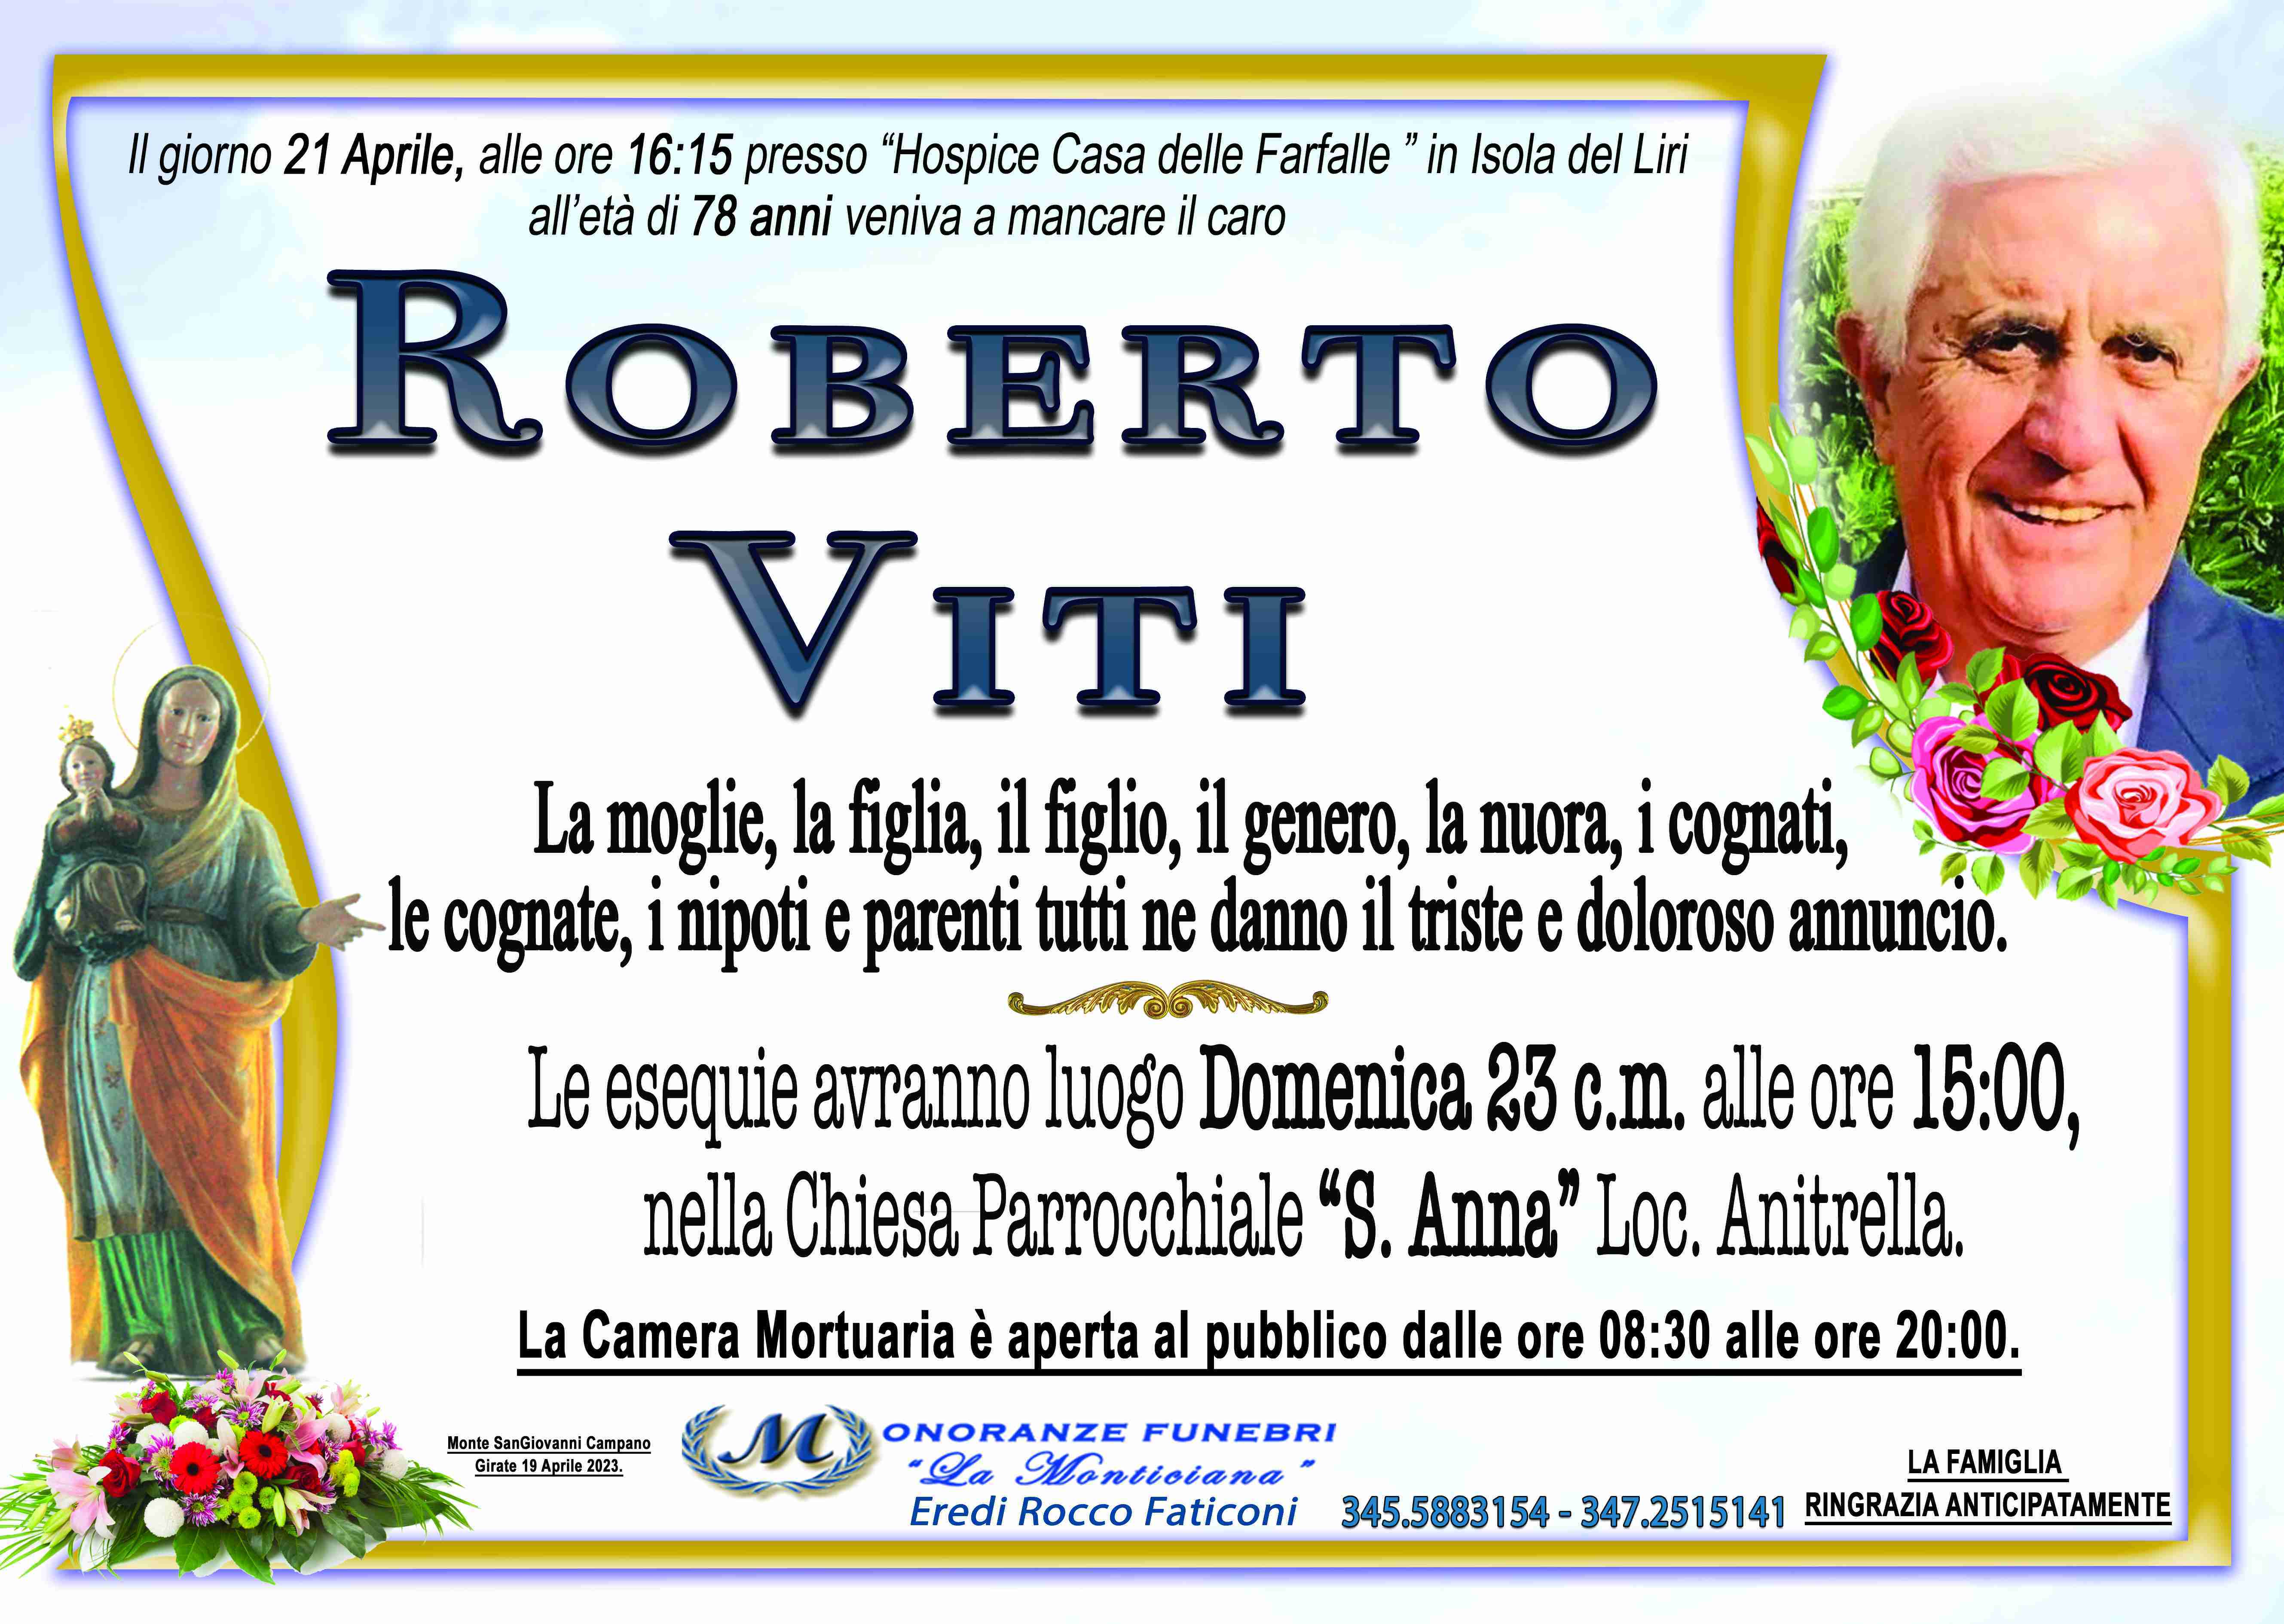 Roberto Viti